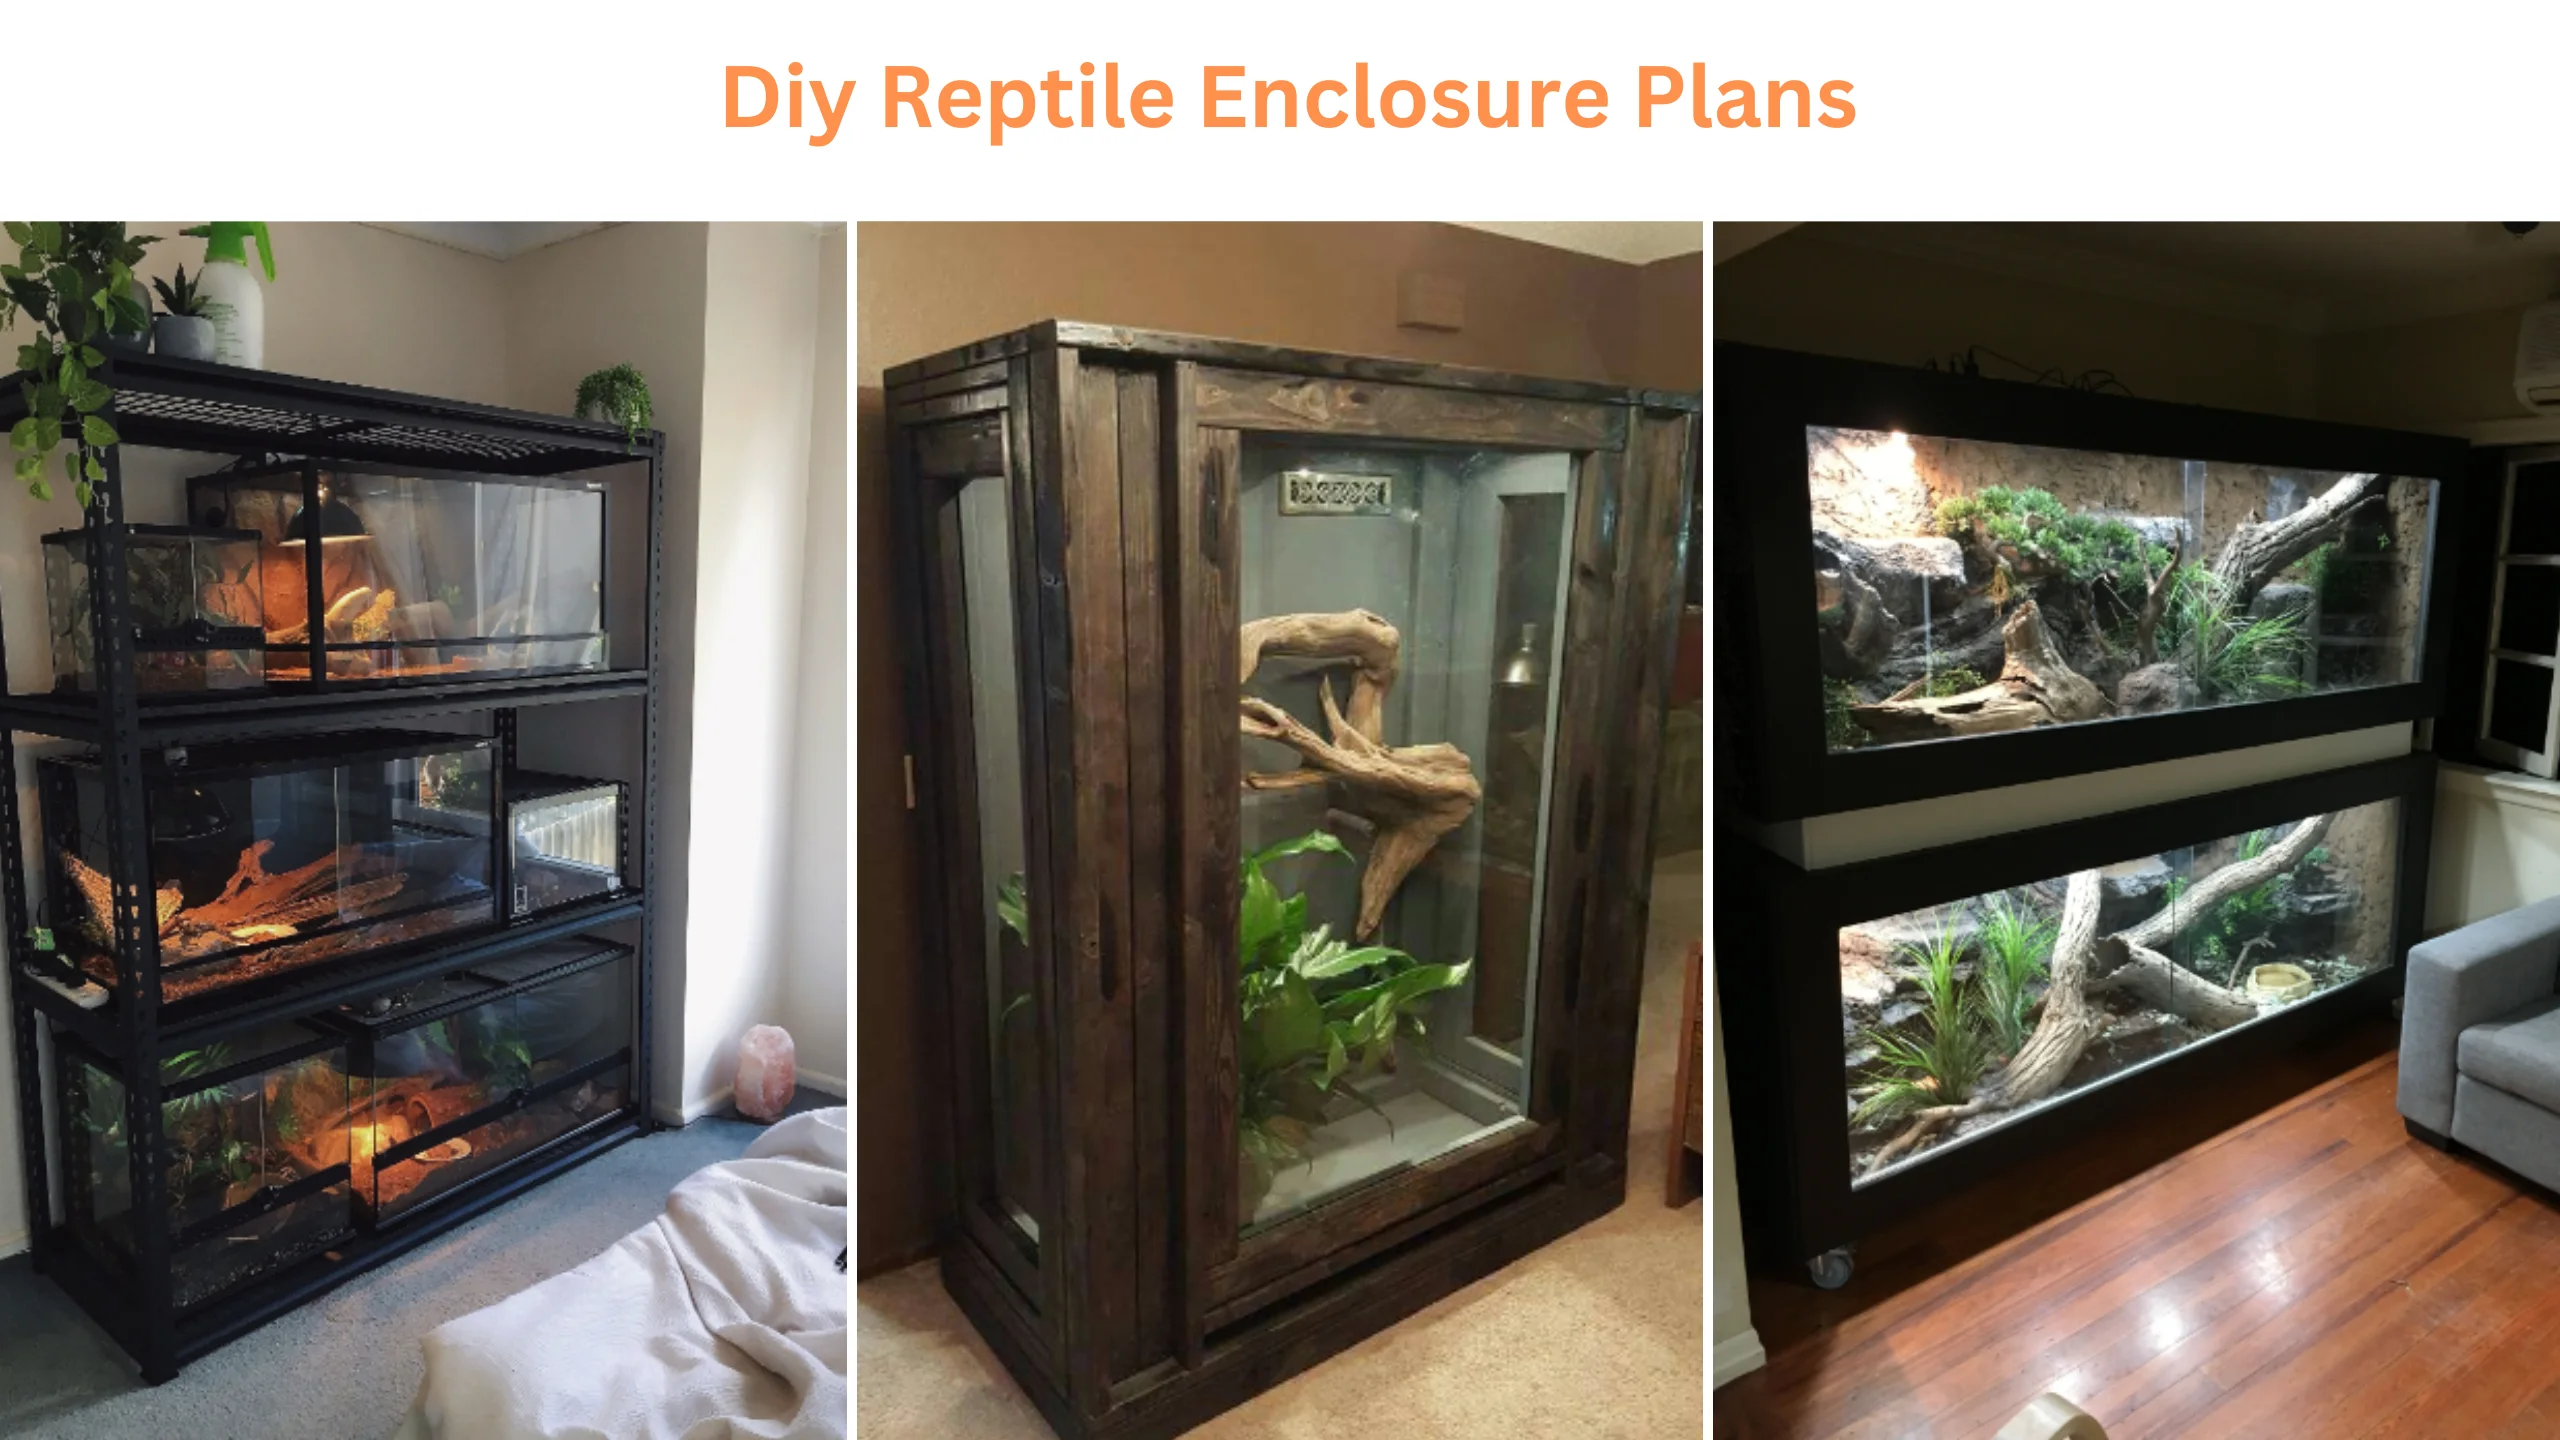 Diy reptile enclosure plans (2)